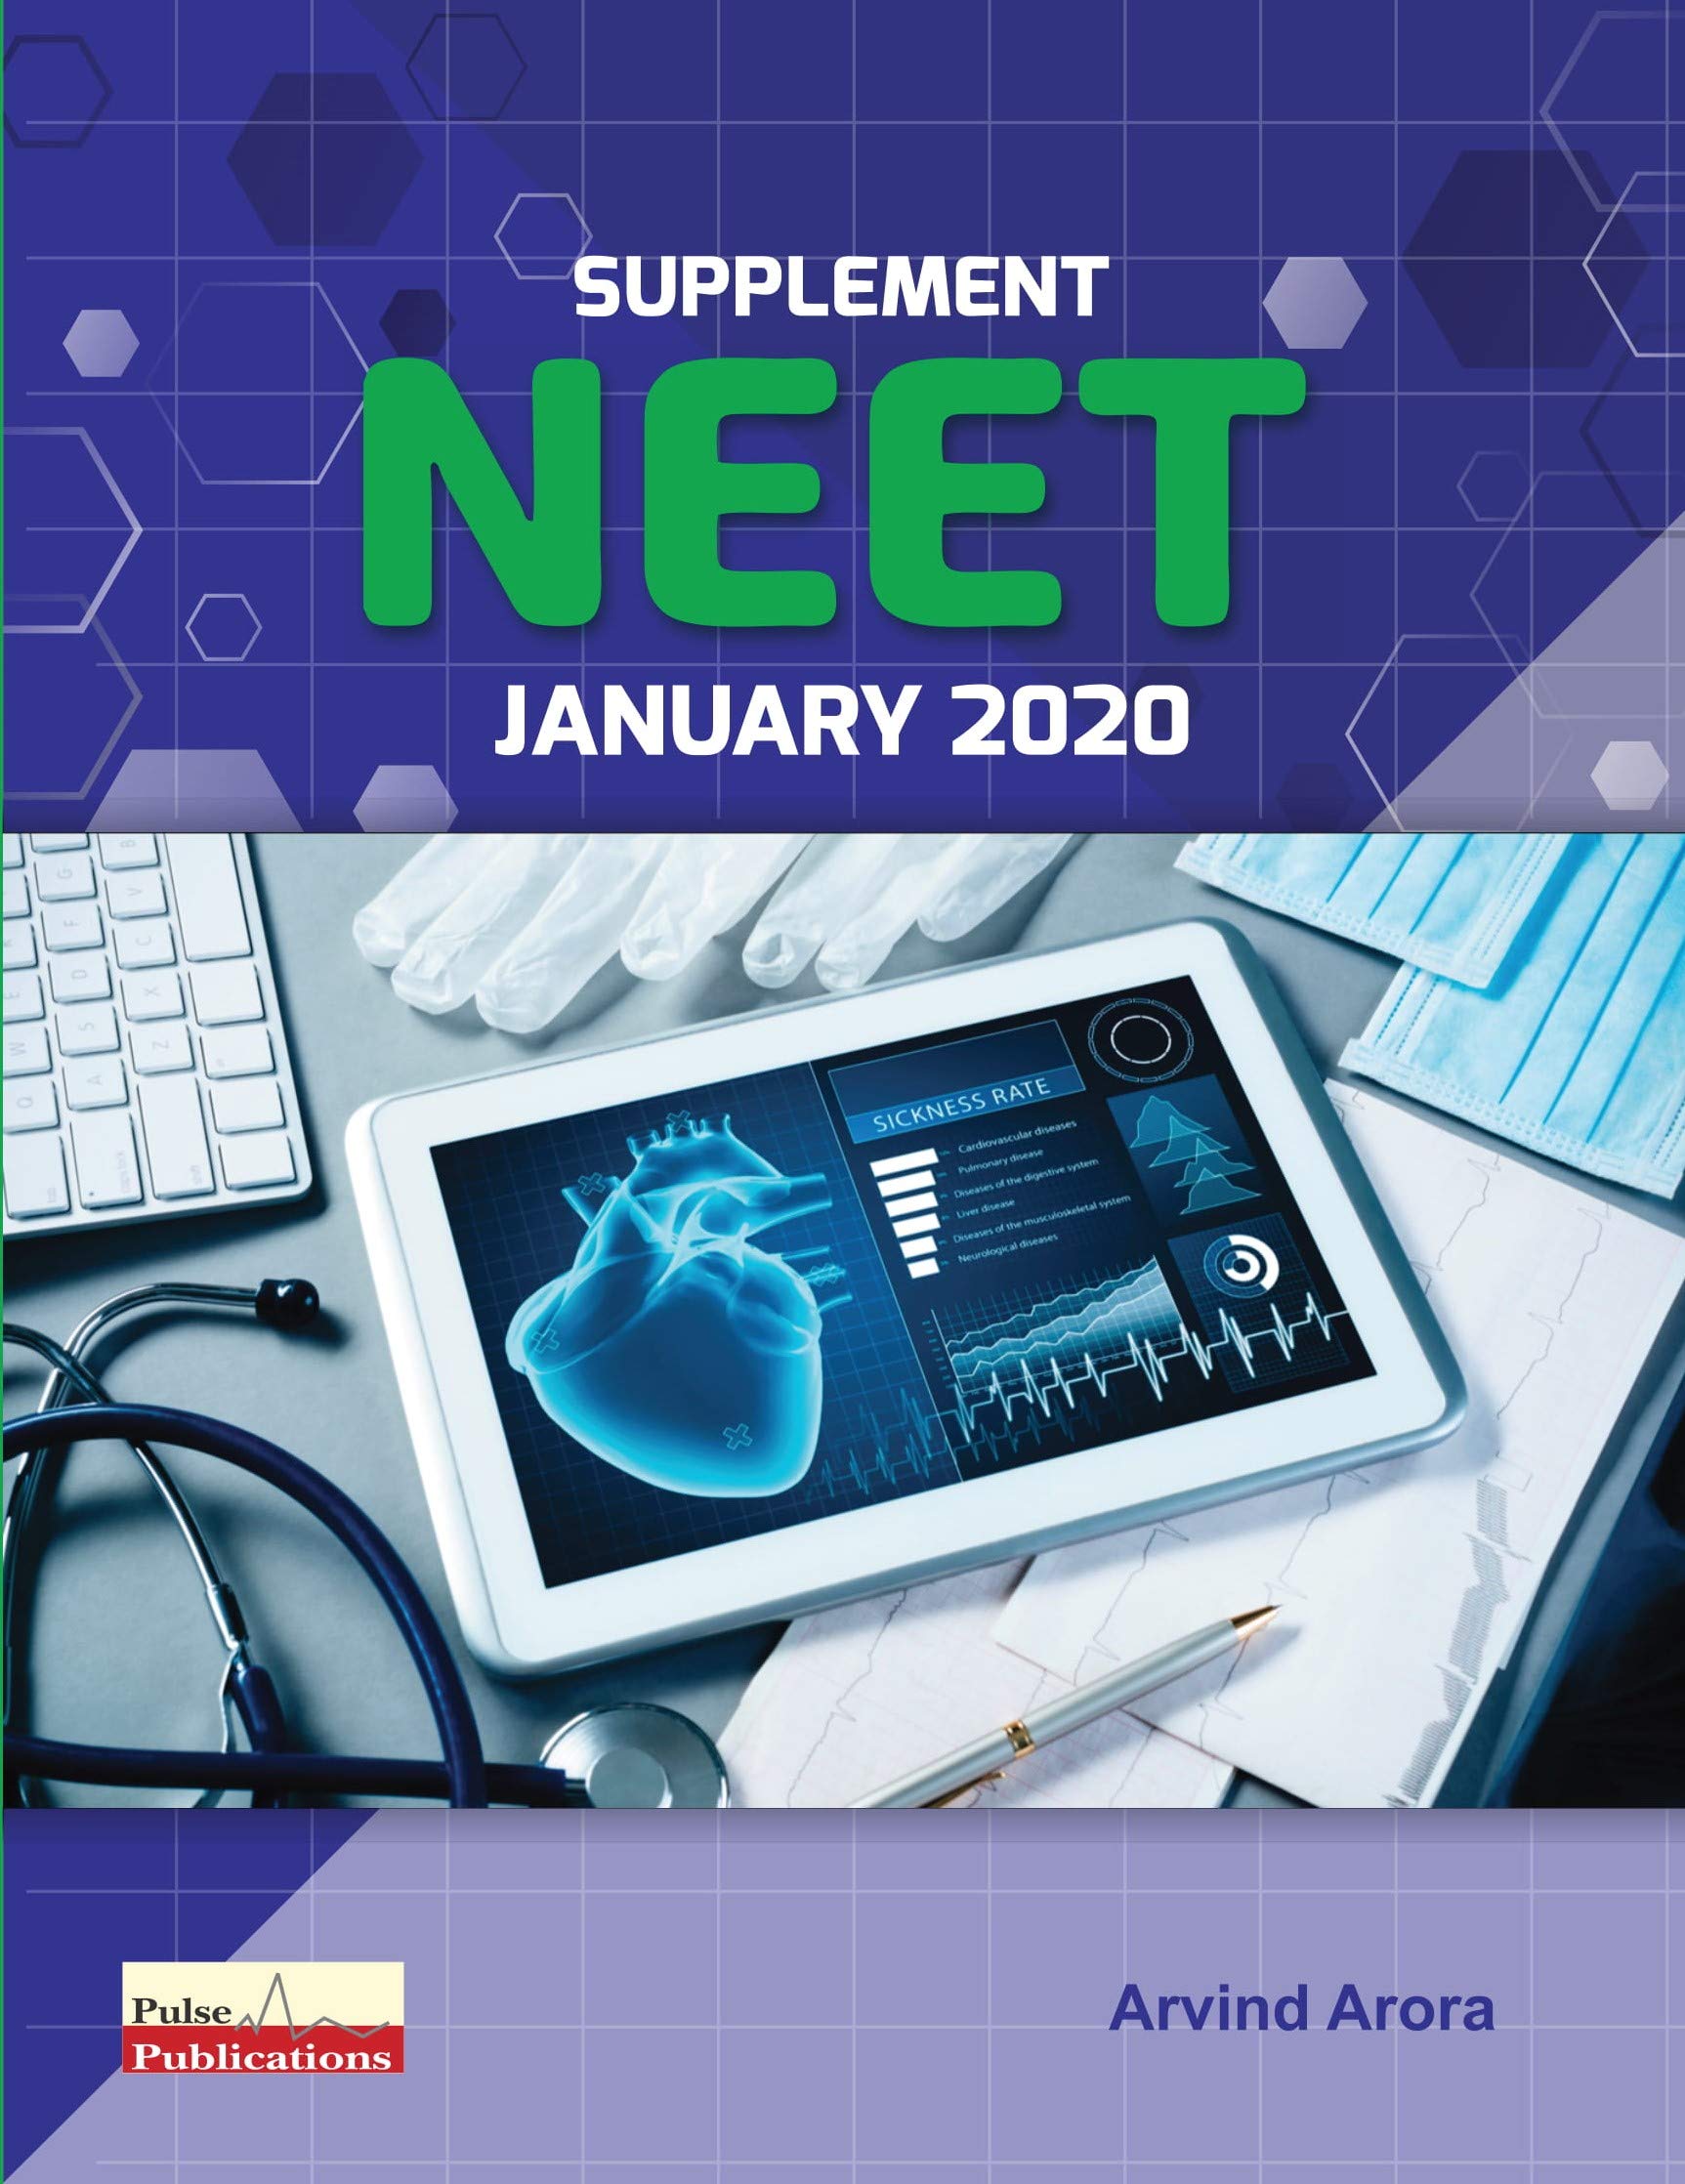 All India Neet Supplement Jan 2020